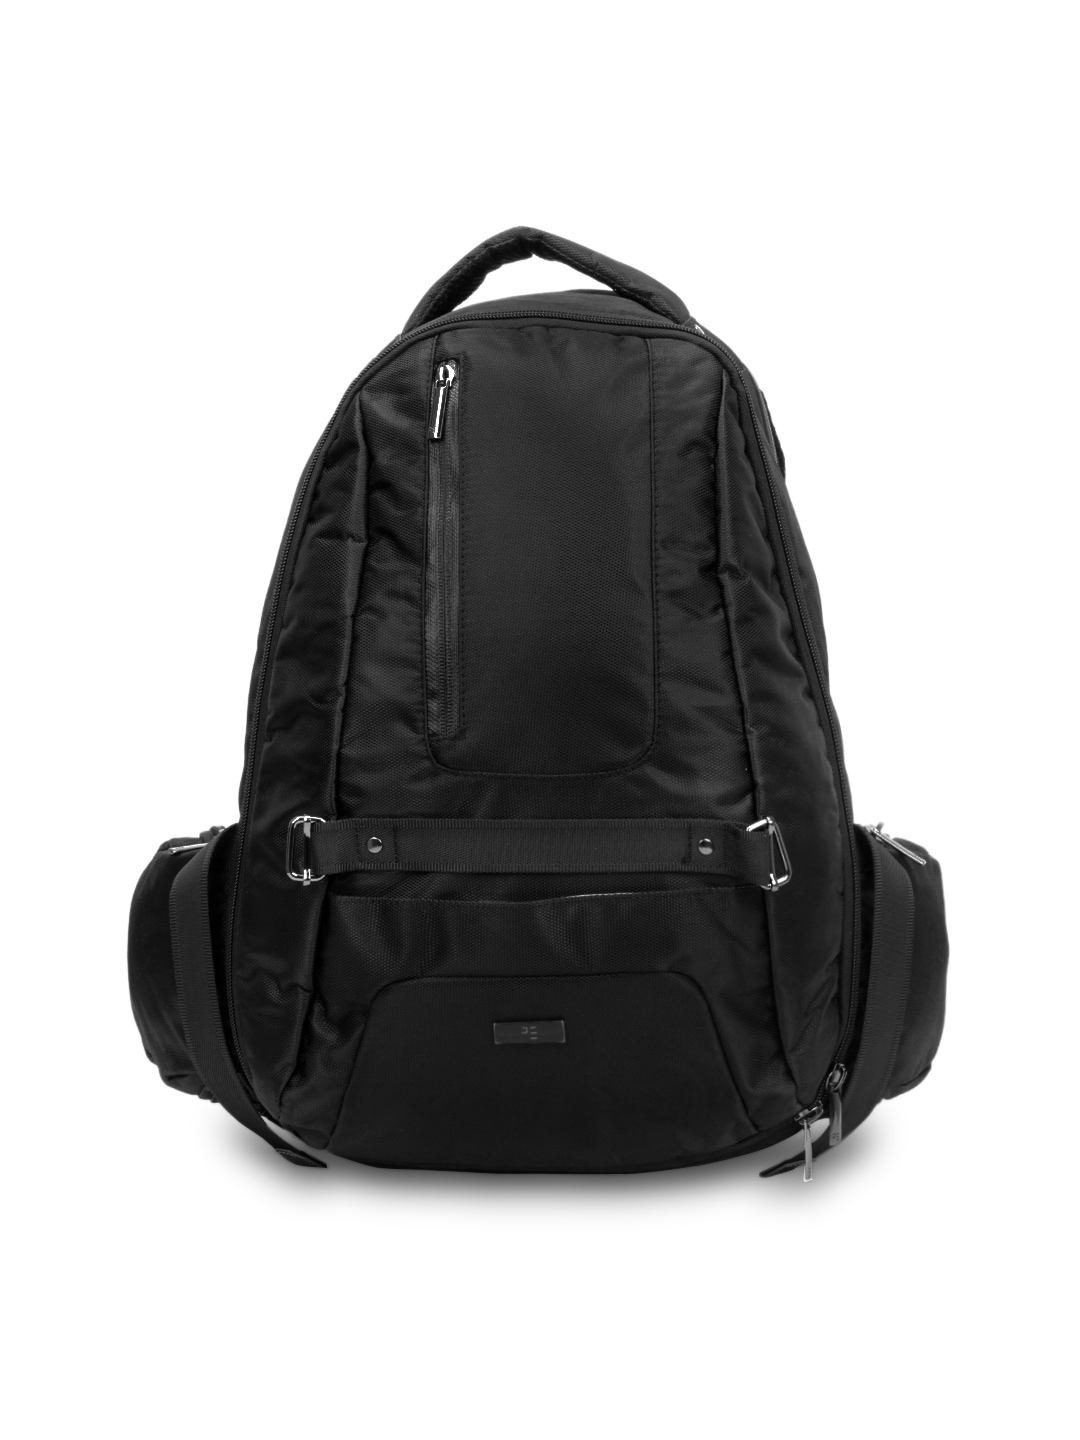 Peter England Unisex Black Backpacks